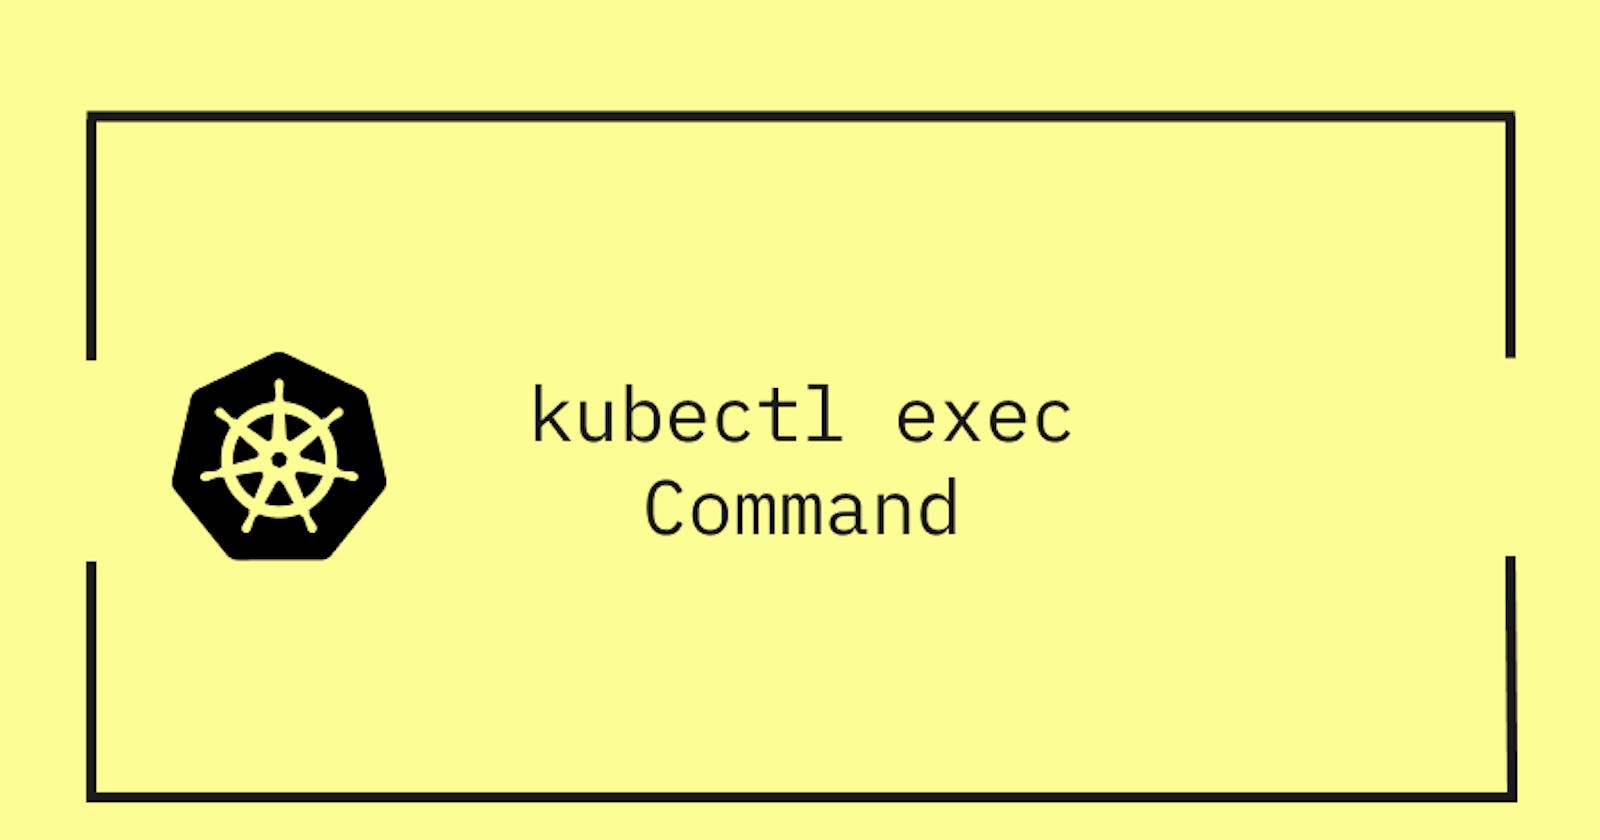 How to use Kubectl Exec Command?